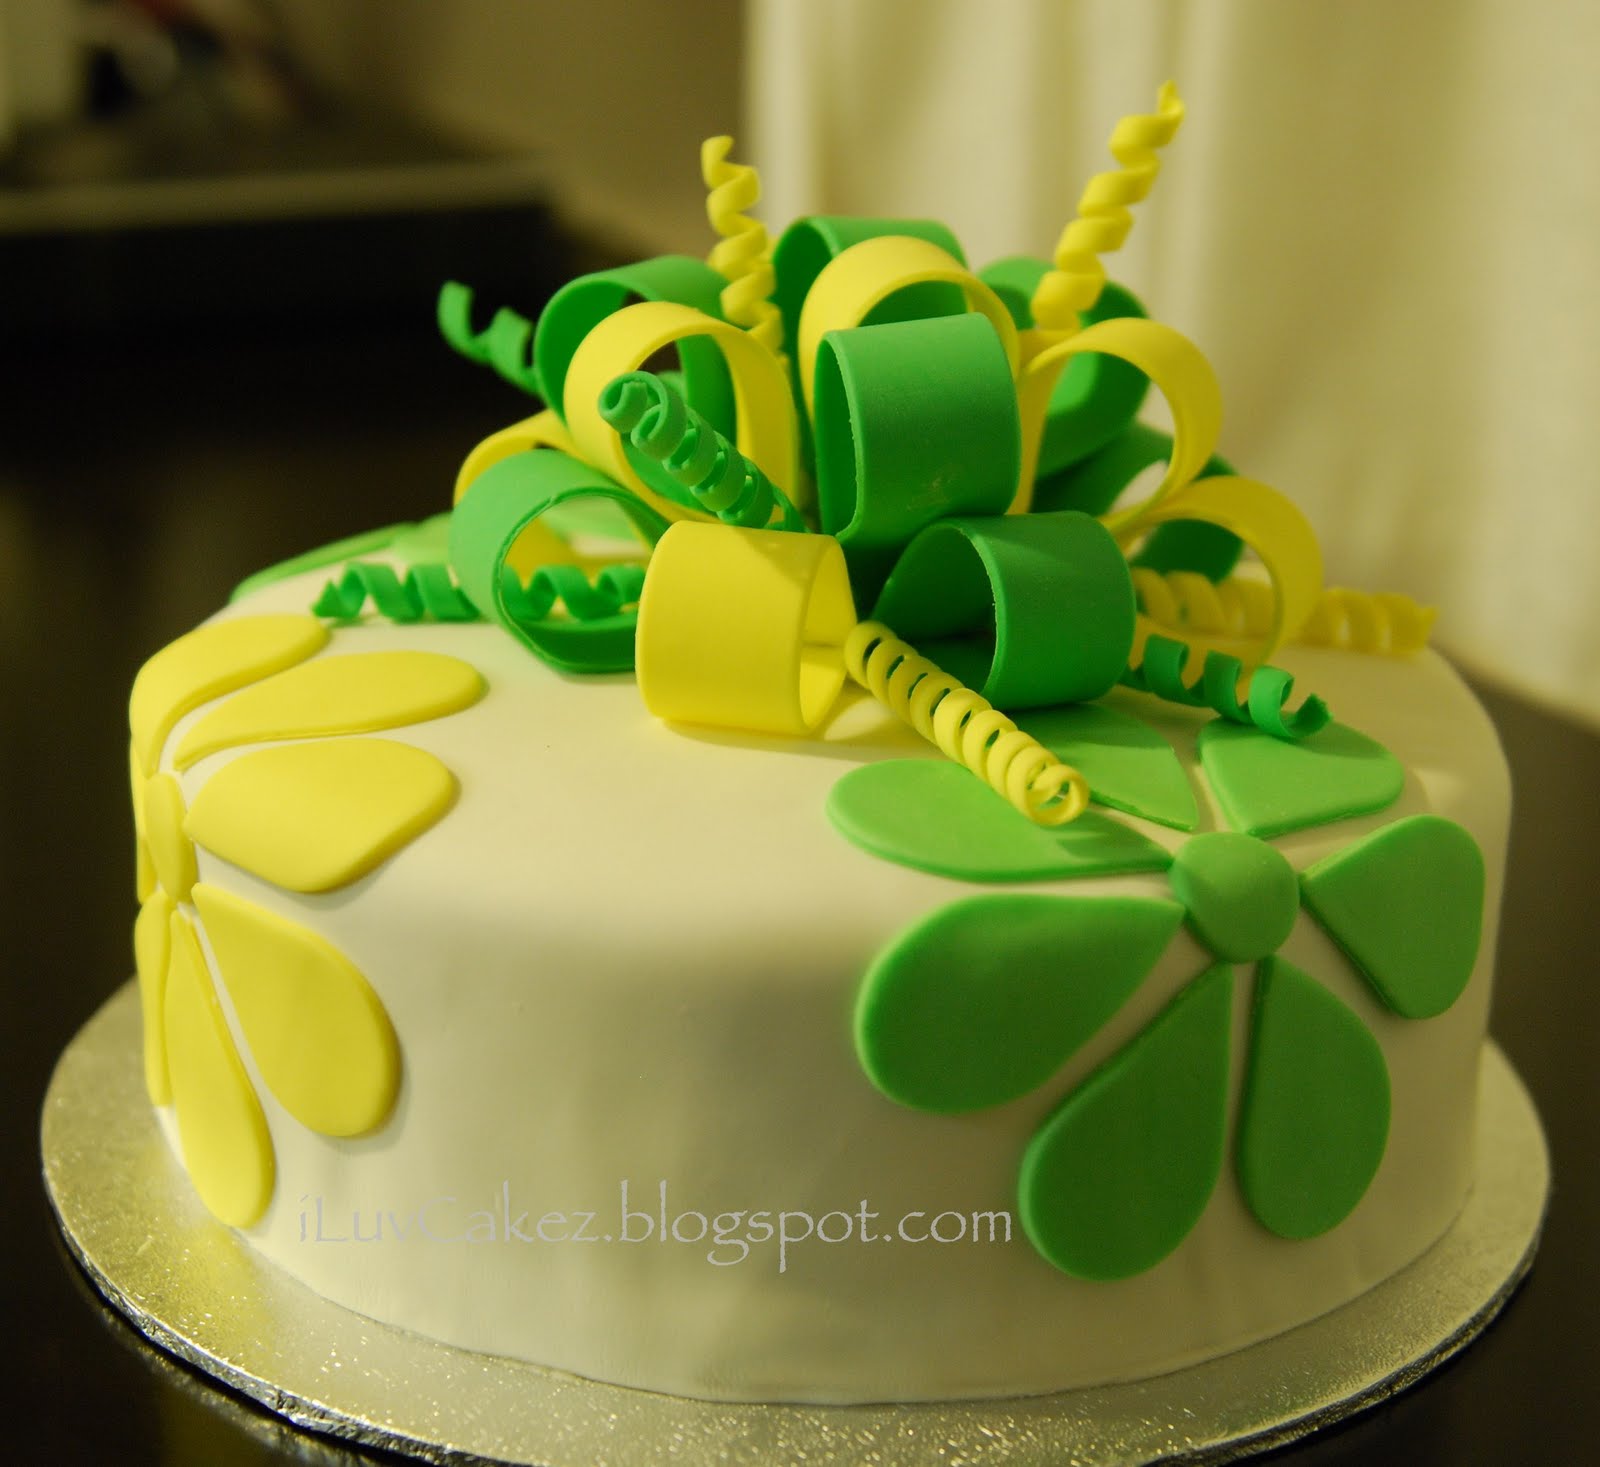 iLuv Cakez: Misato's 12th Birthday Cake (Green & Yellow Bow)